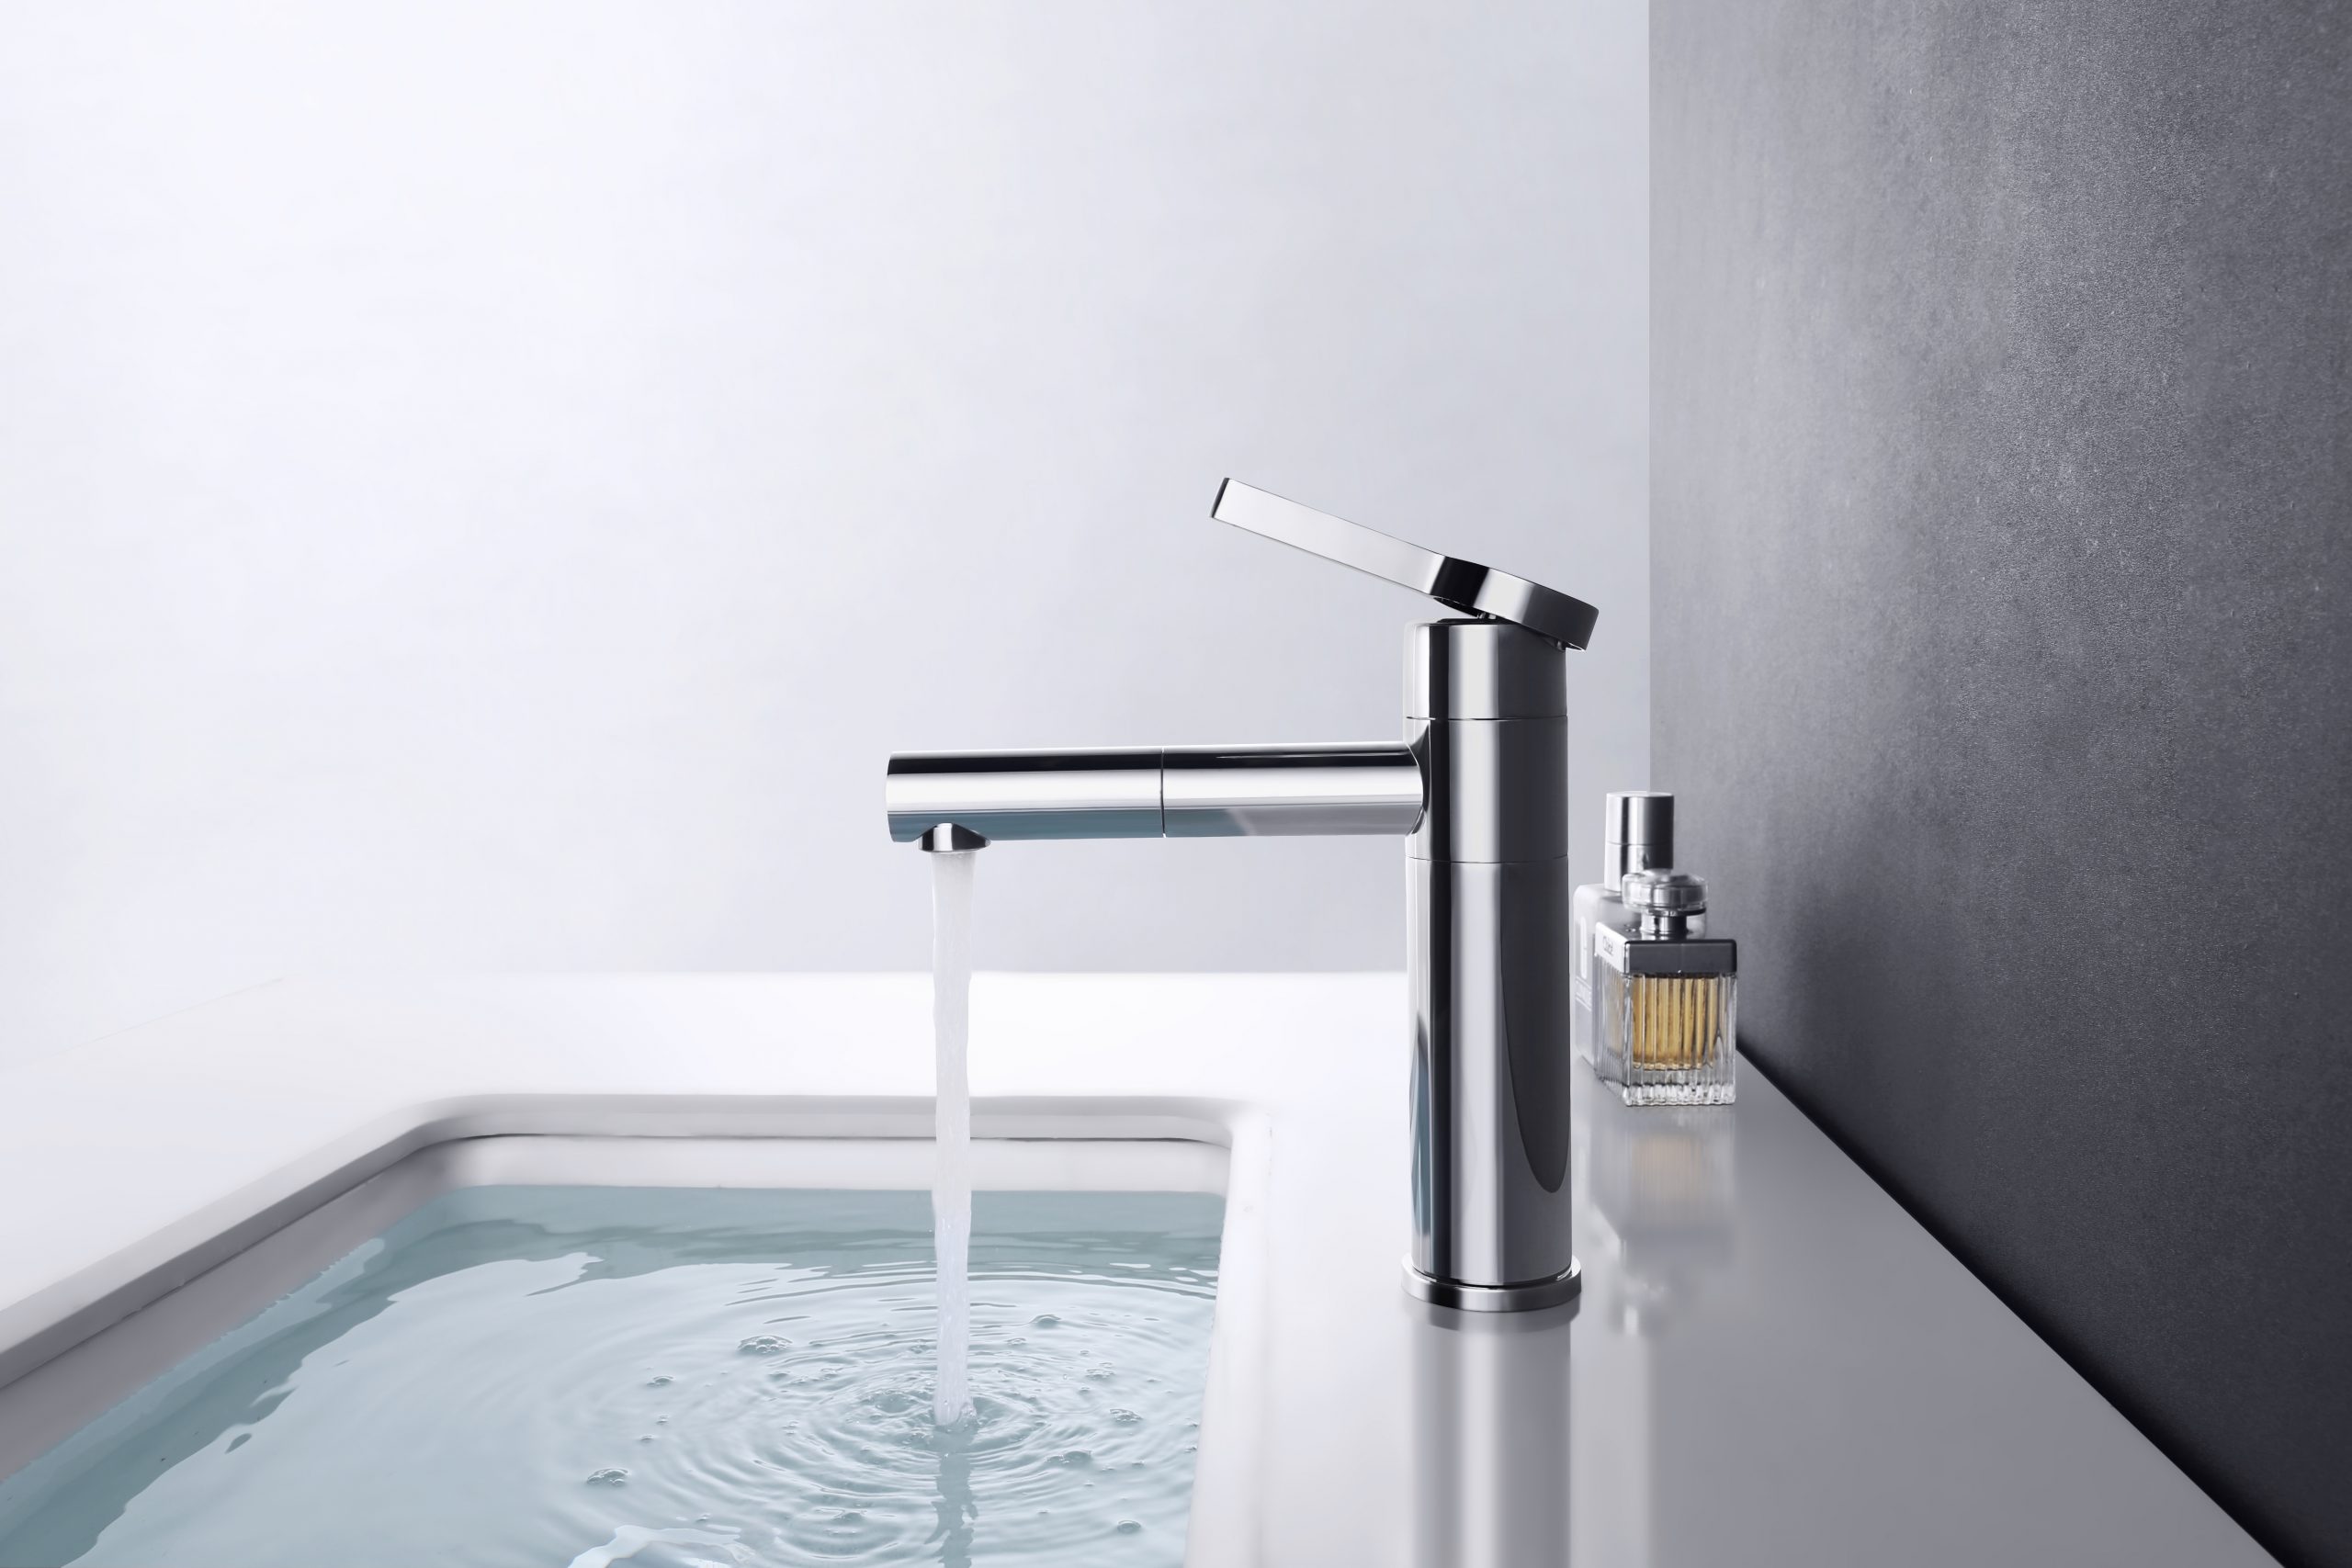 Arcora Modern Single Hole Bathroom Faucet, Single Handle Bathroom Faucet Chrome with Swivel Spout